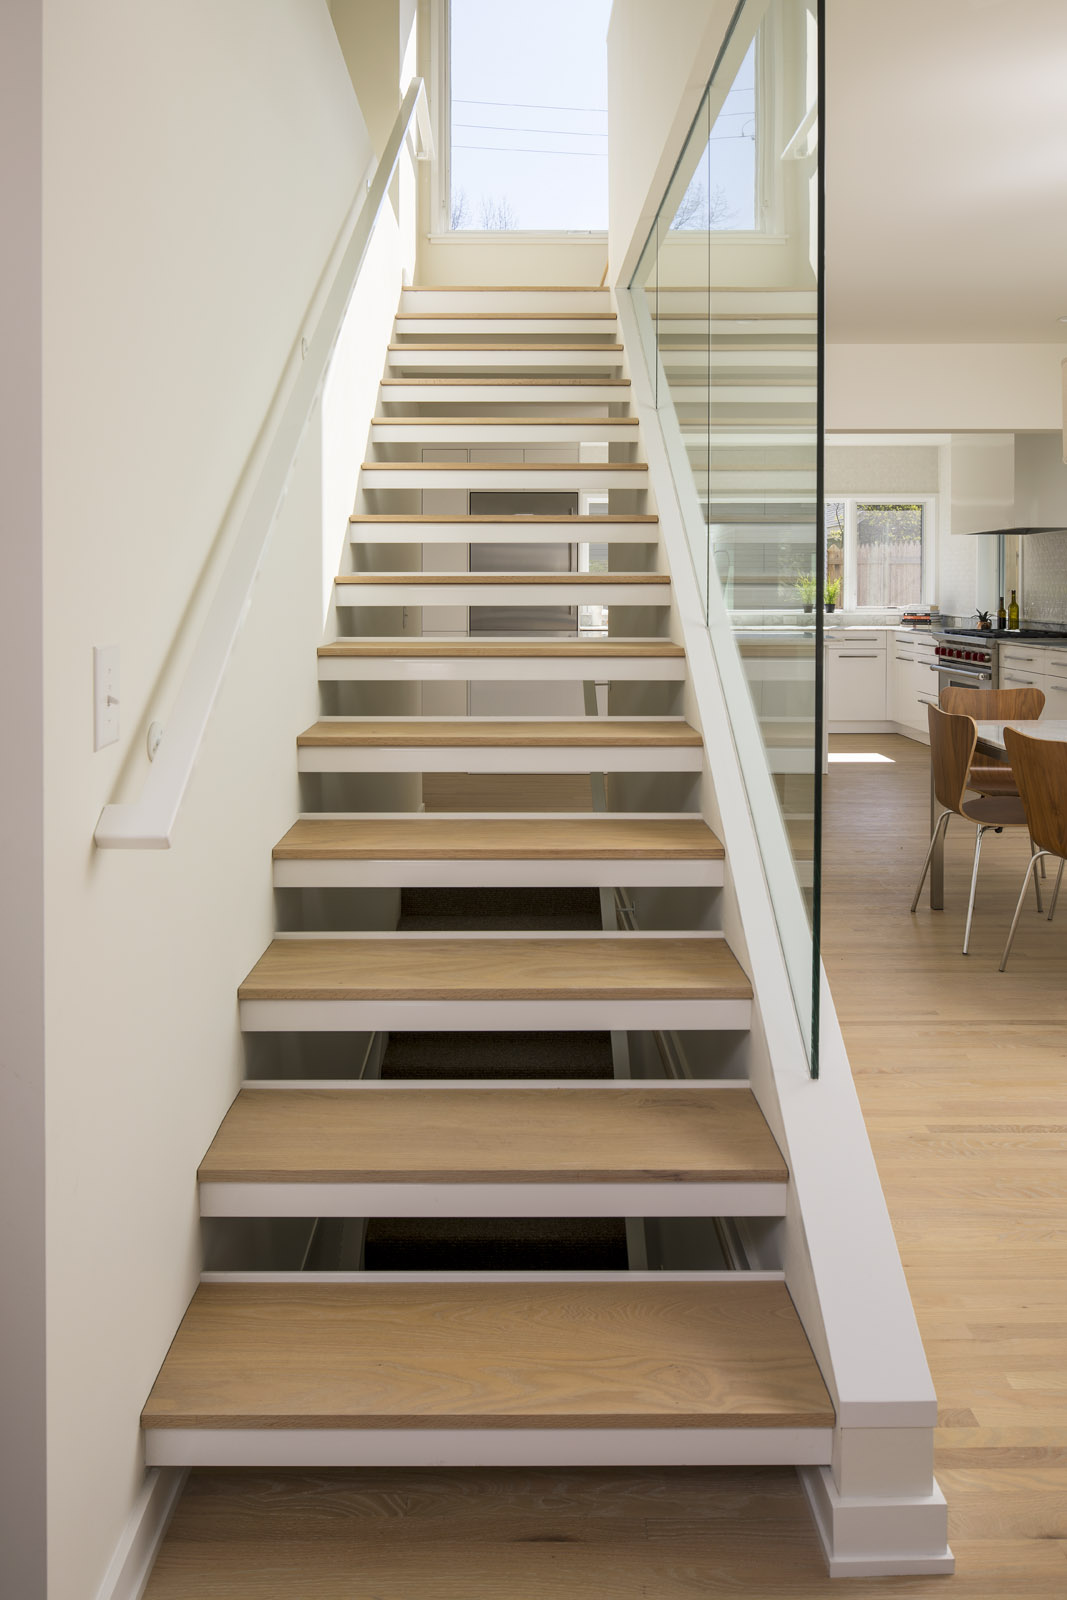 Custom open wood stair tread detail in modern home